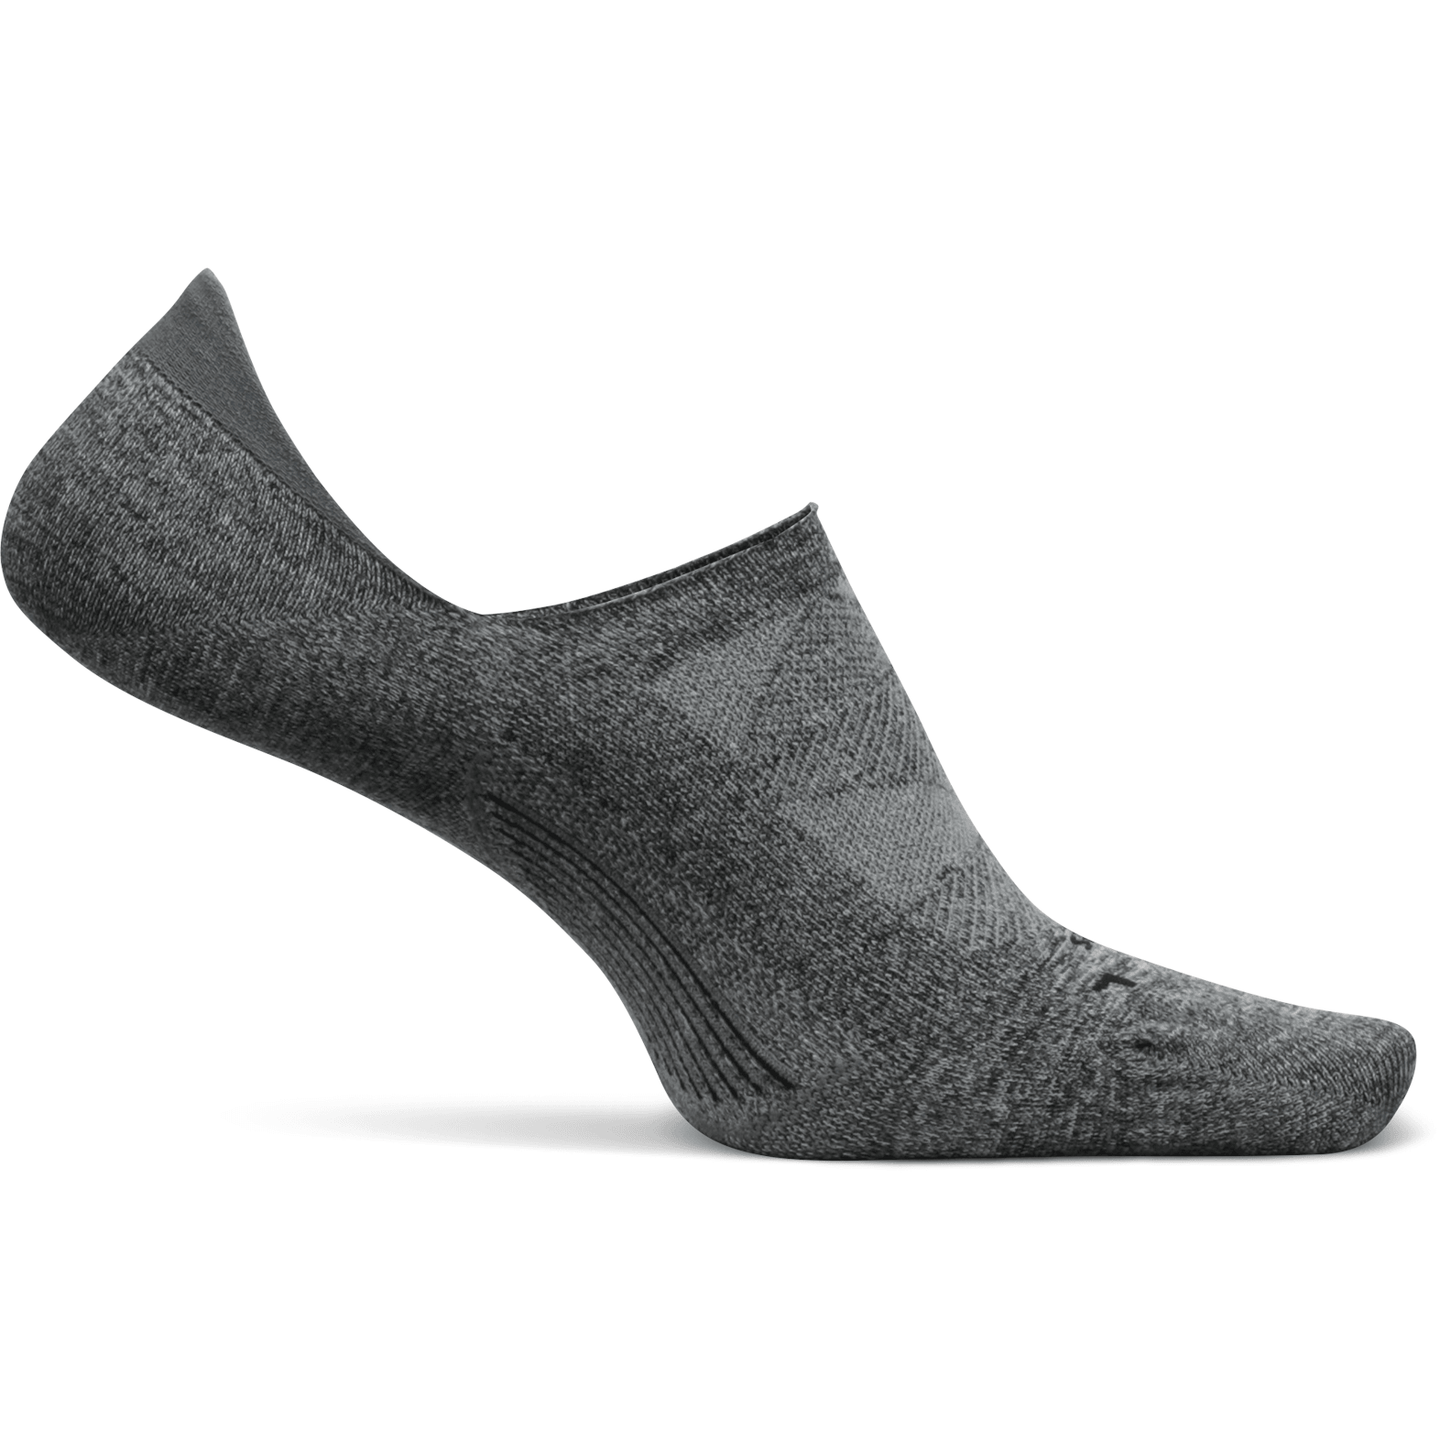 Elite Ultra Light Invisible - Feetures - Karavel Shoes - karavelshoes.com